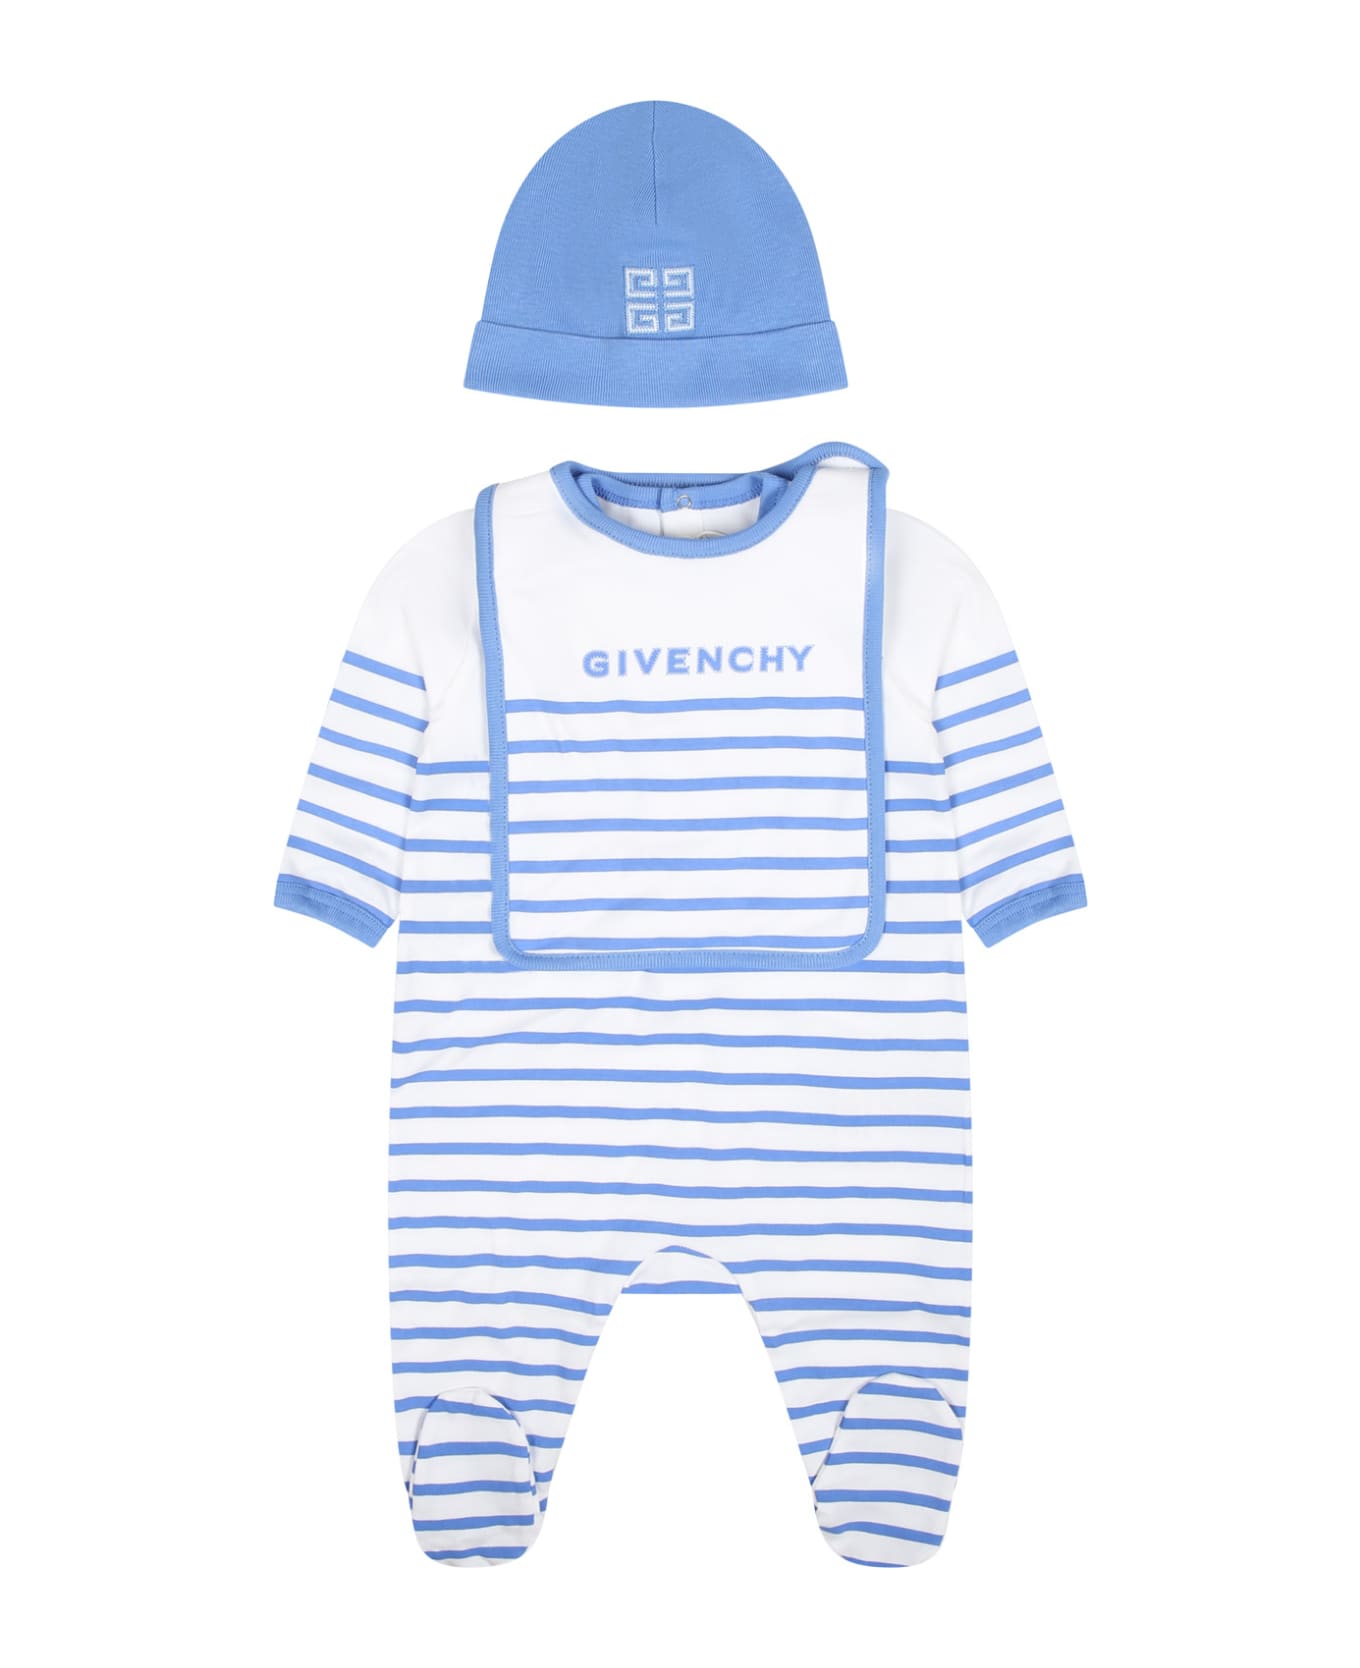 Givenchy Light Blue Set For Baby Boy With Logo Stripes - Light Blue